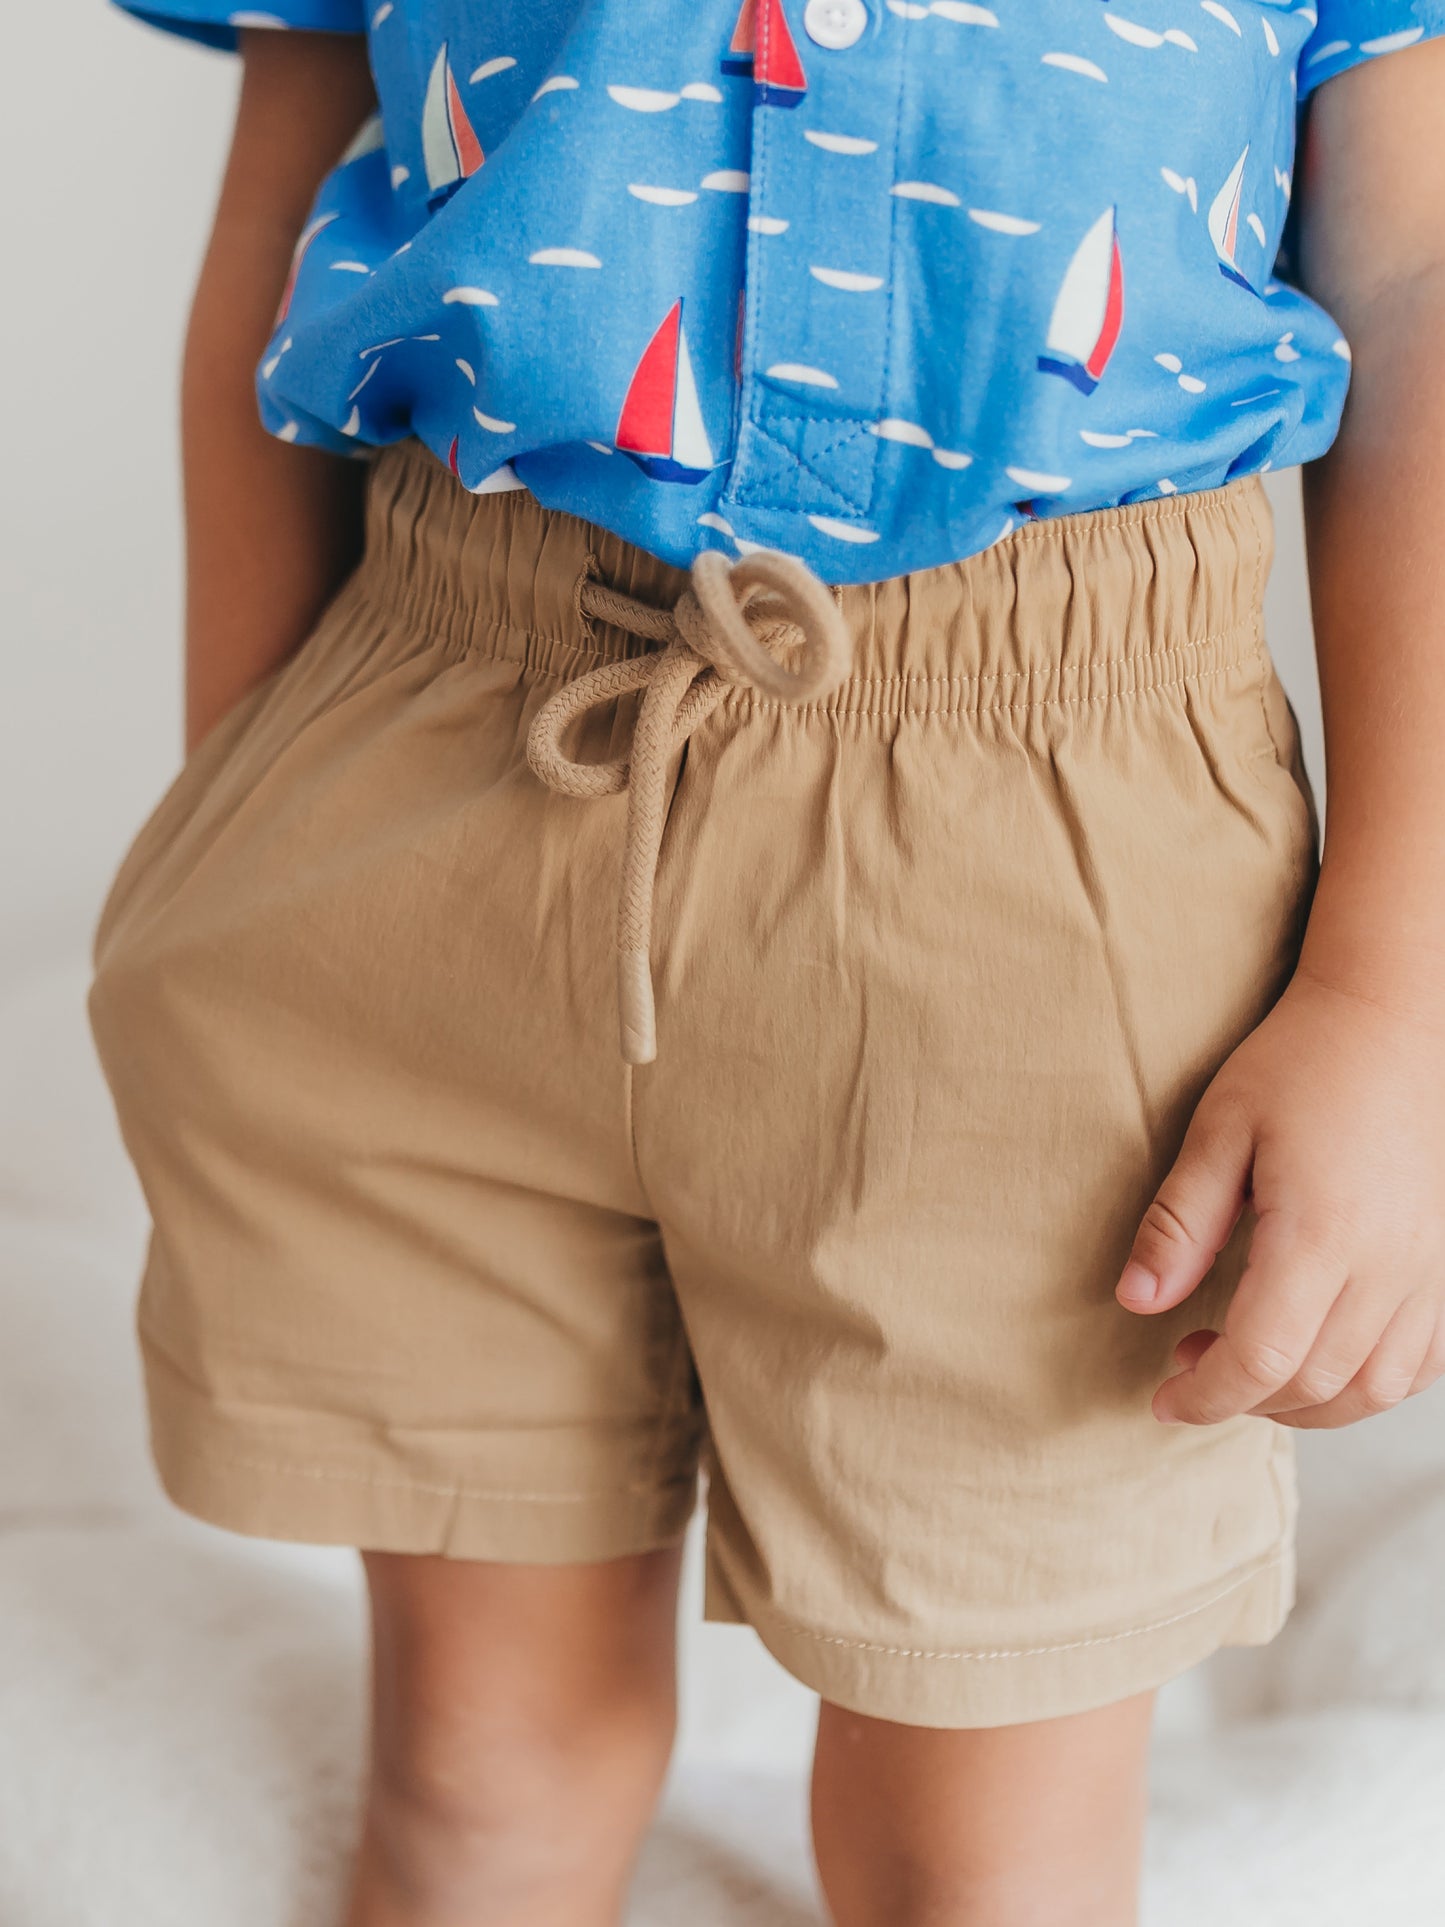 Boy's Shorts - Khaki